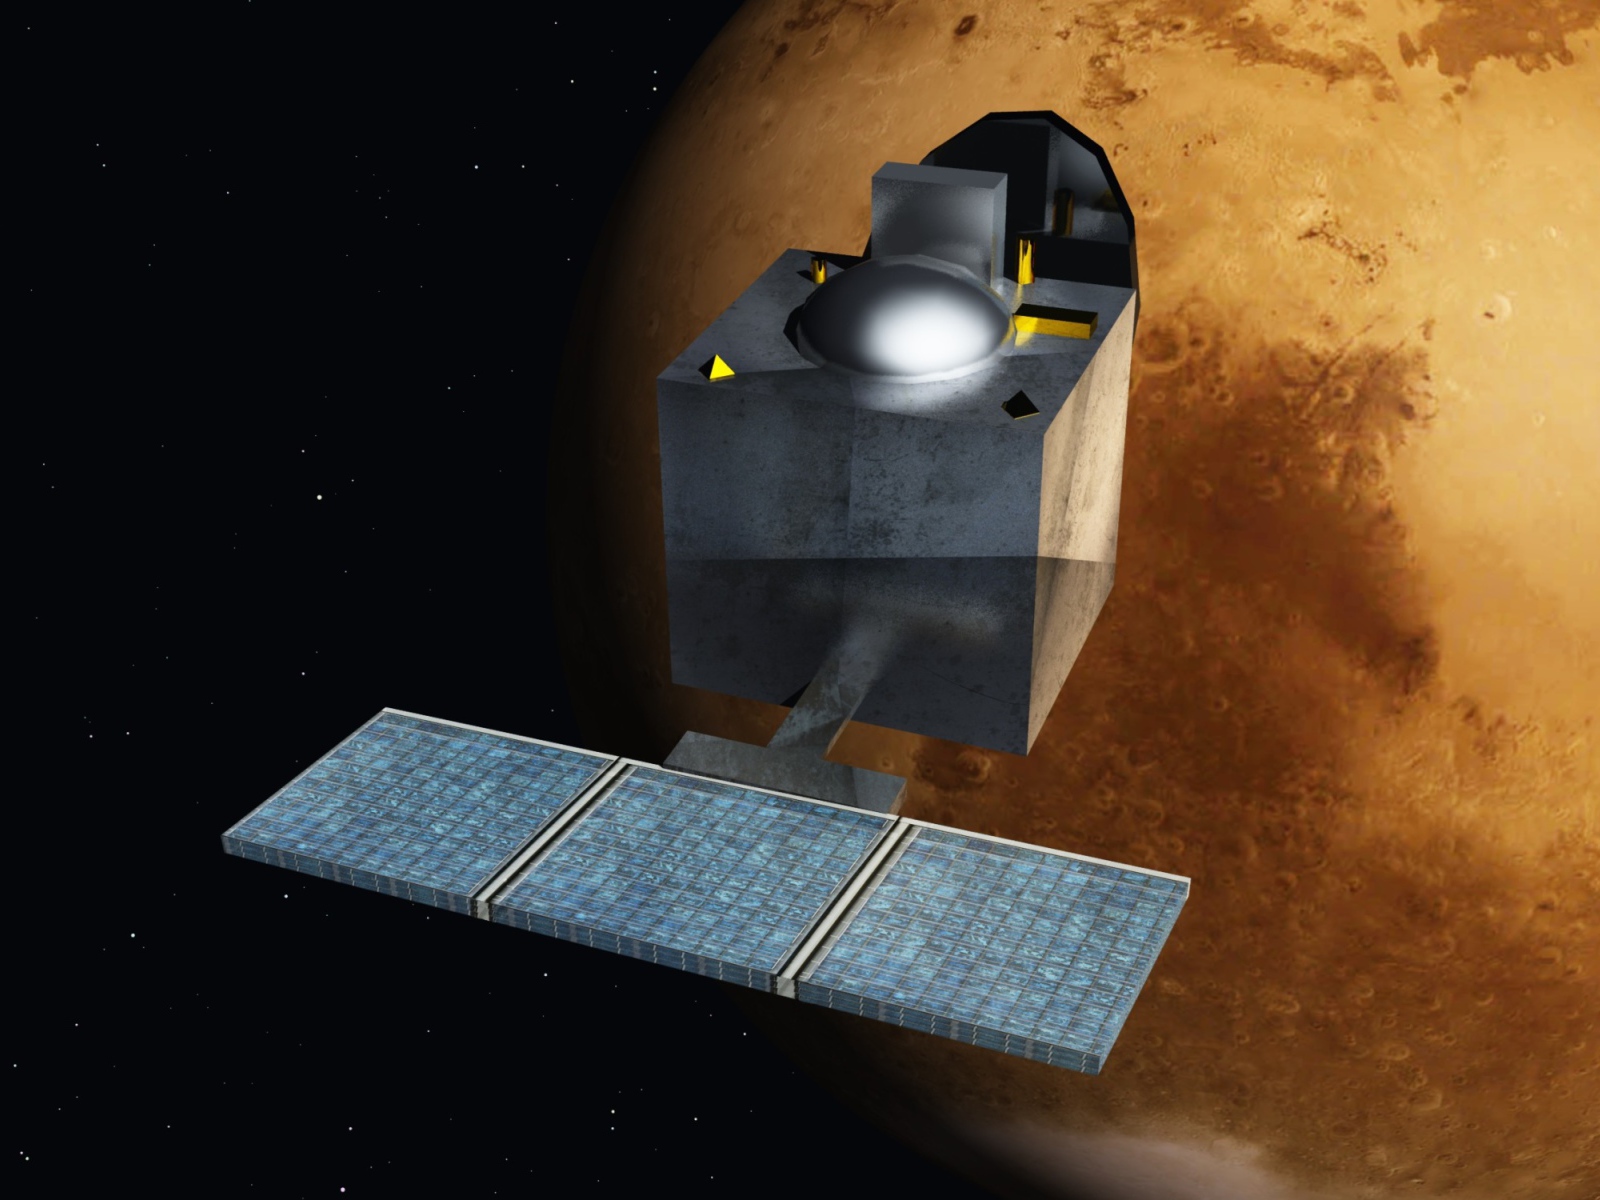 Indian spacecraft to Mars orbit Mangalyaan